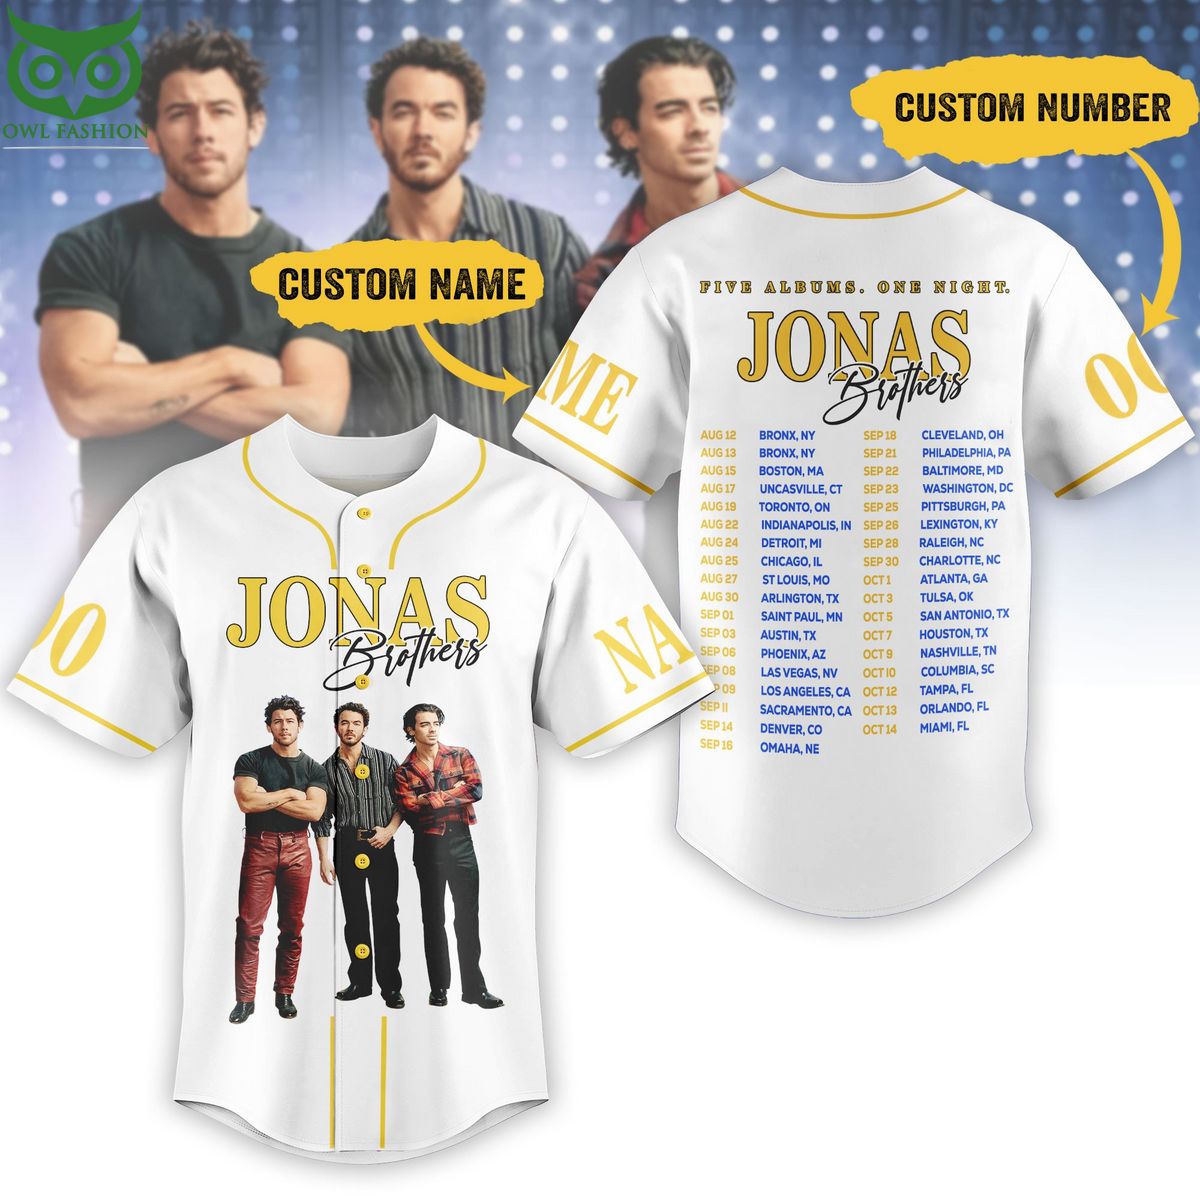 jonas brothers albums customized baseball jersey shirt 1 UAaDp.jpg